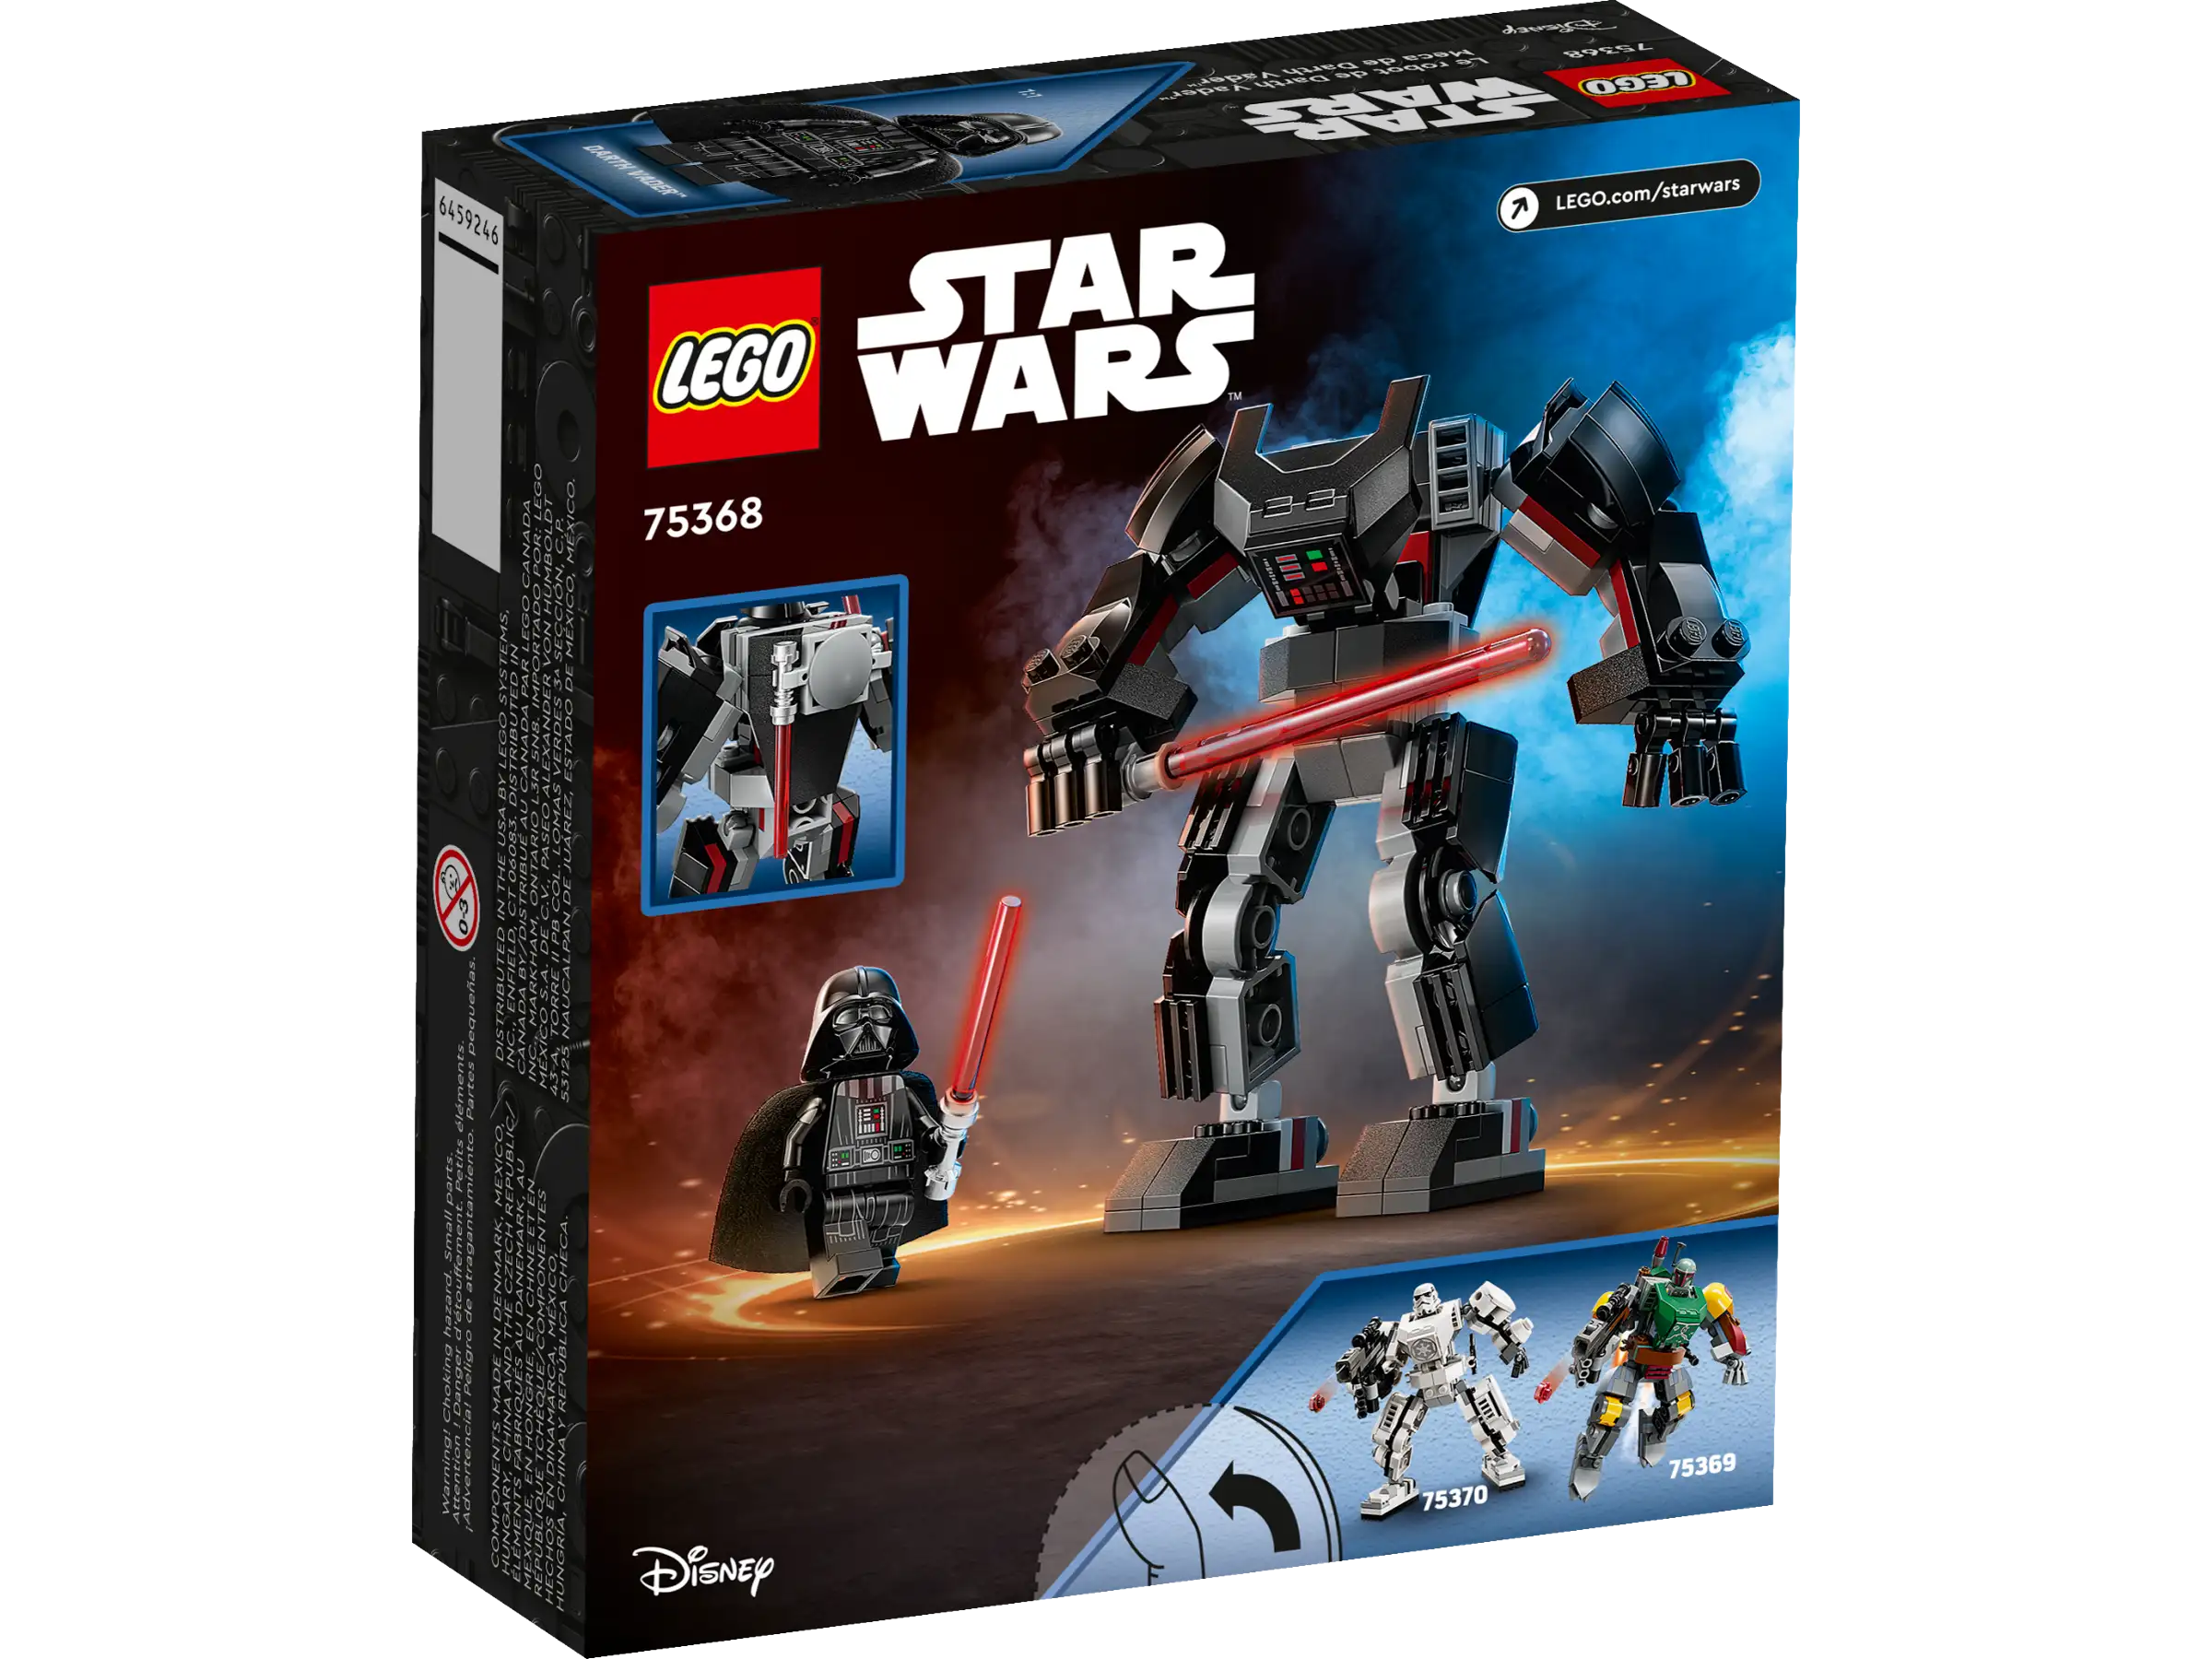 LEGO 75368 Darth Vader™ Mech